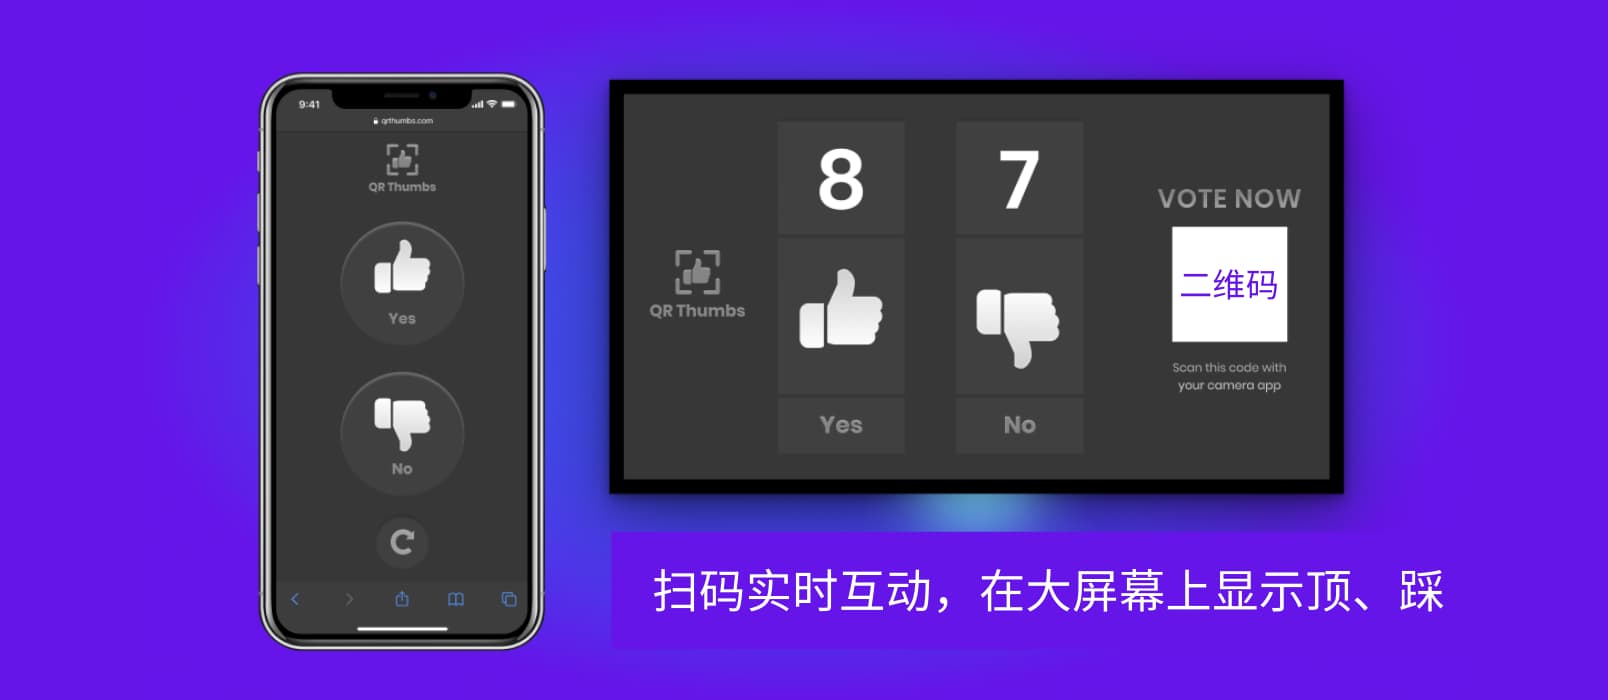 QR Thumbs - 扫码实时互动，在大屏幕上显示顶、踩